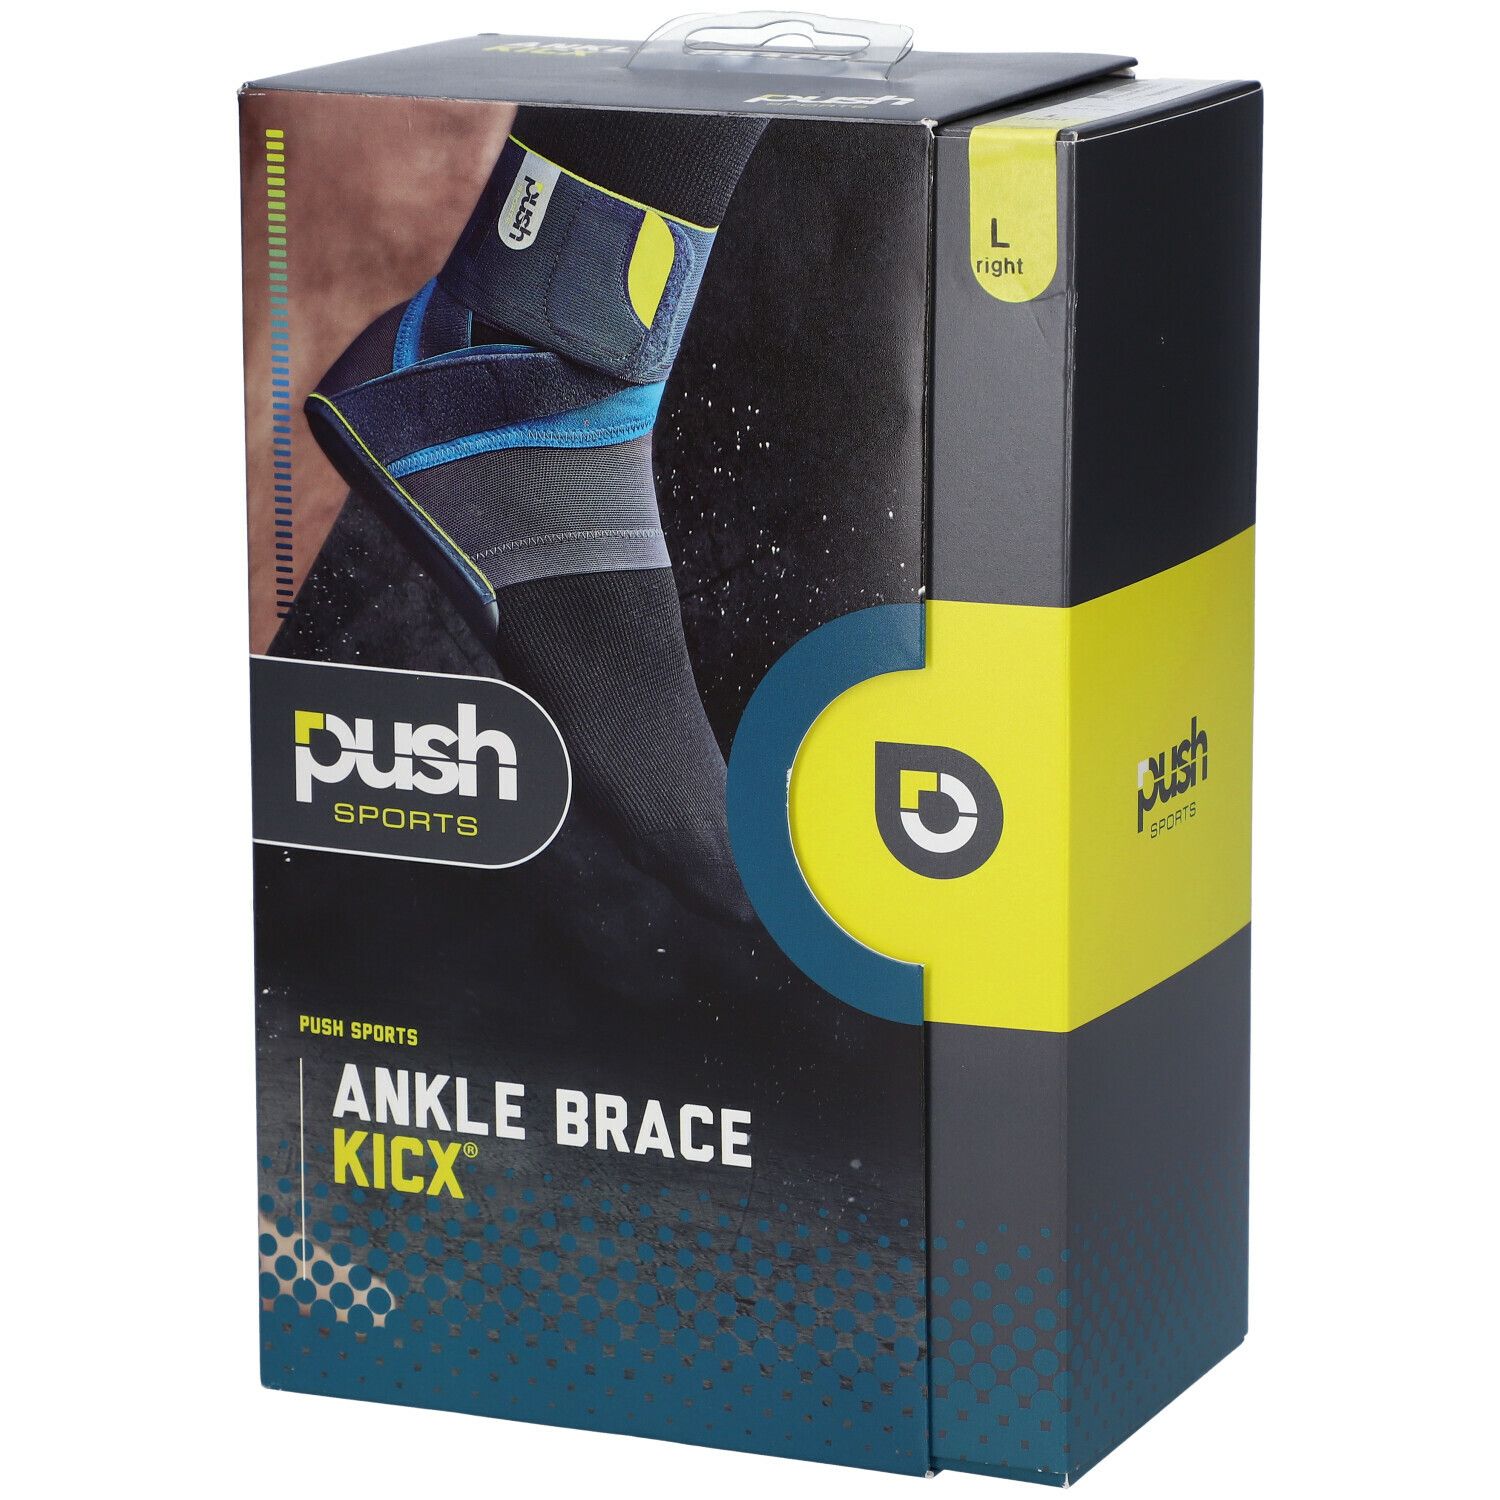 Push Sports Ankle Brace Kicx